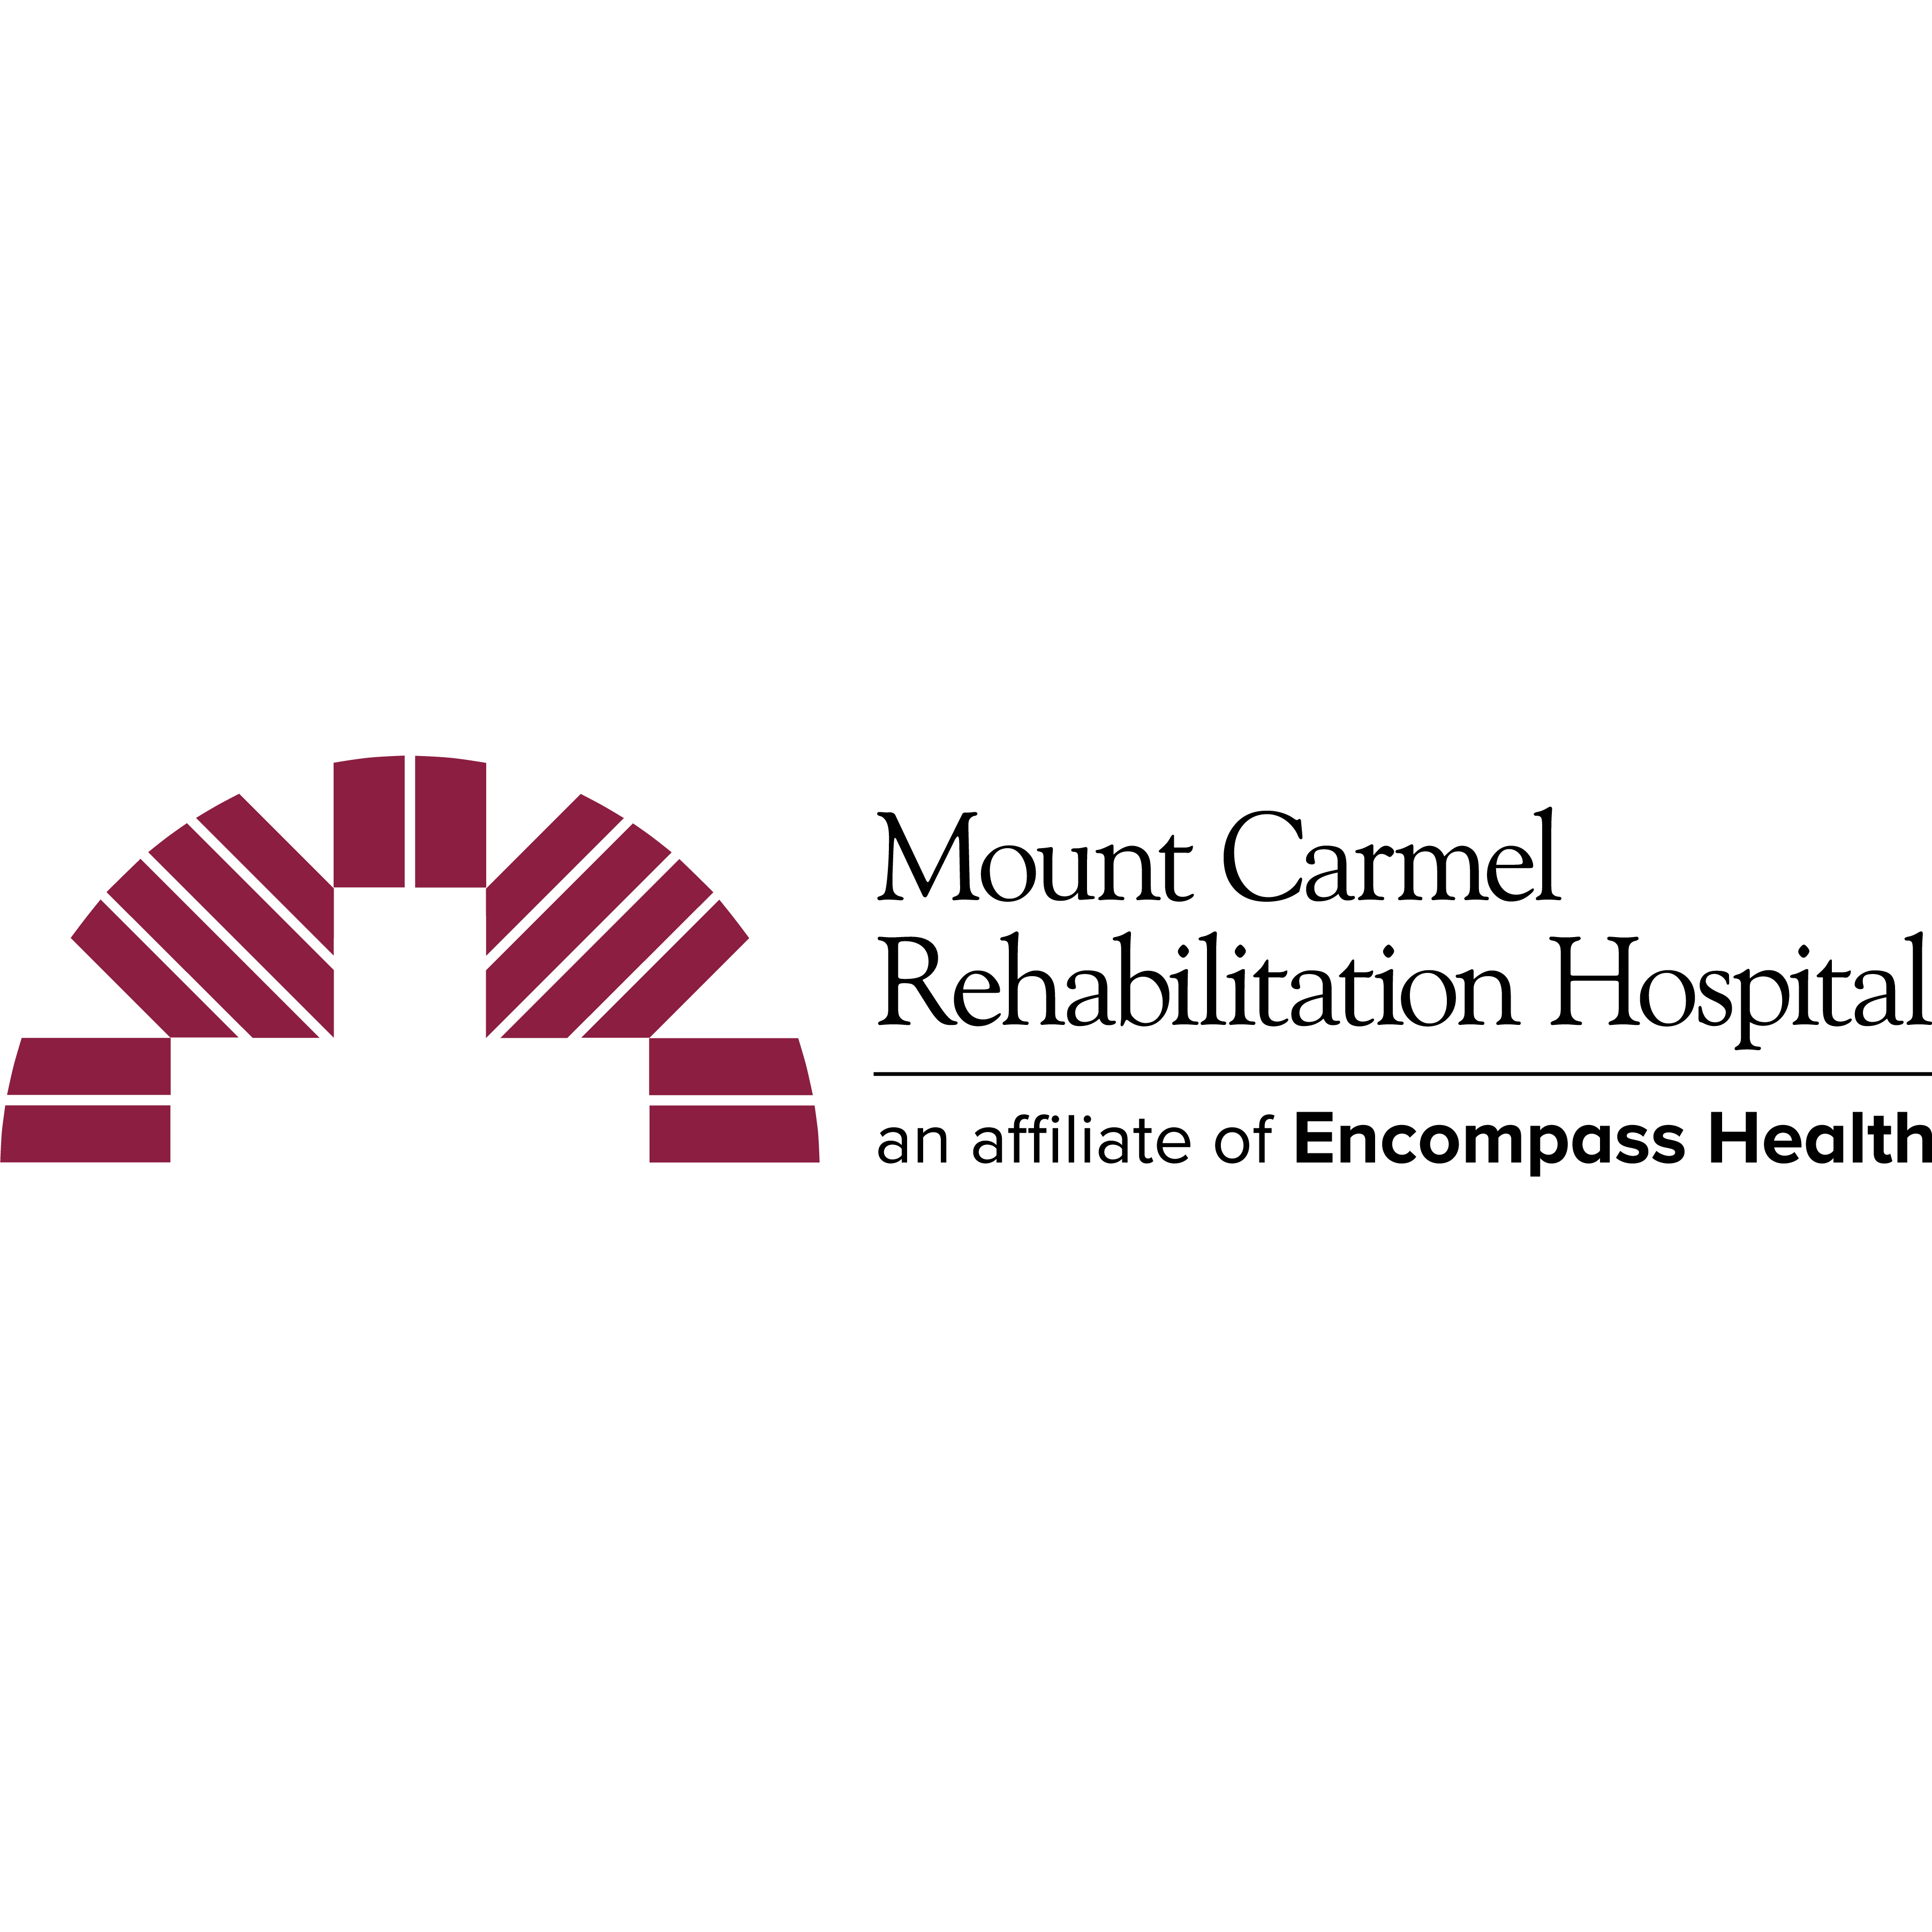 Mount Carmel Rehabilitation Hospital, affl. of Encompass Health